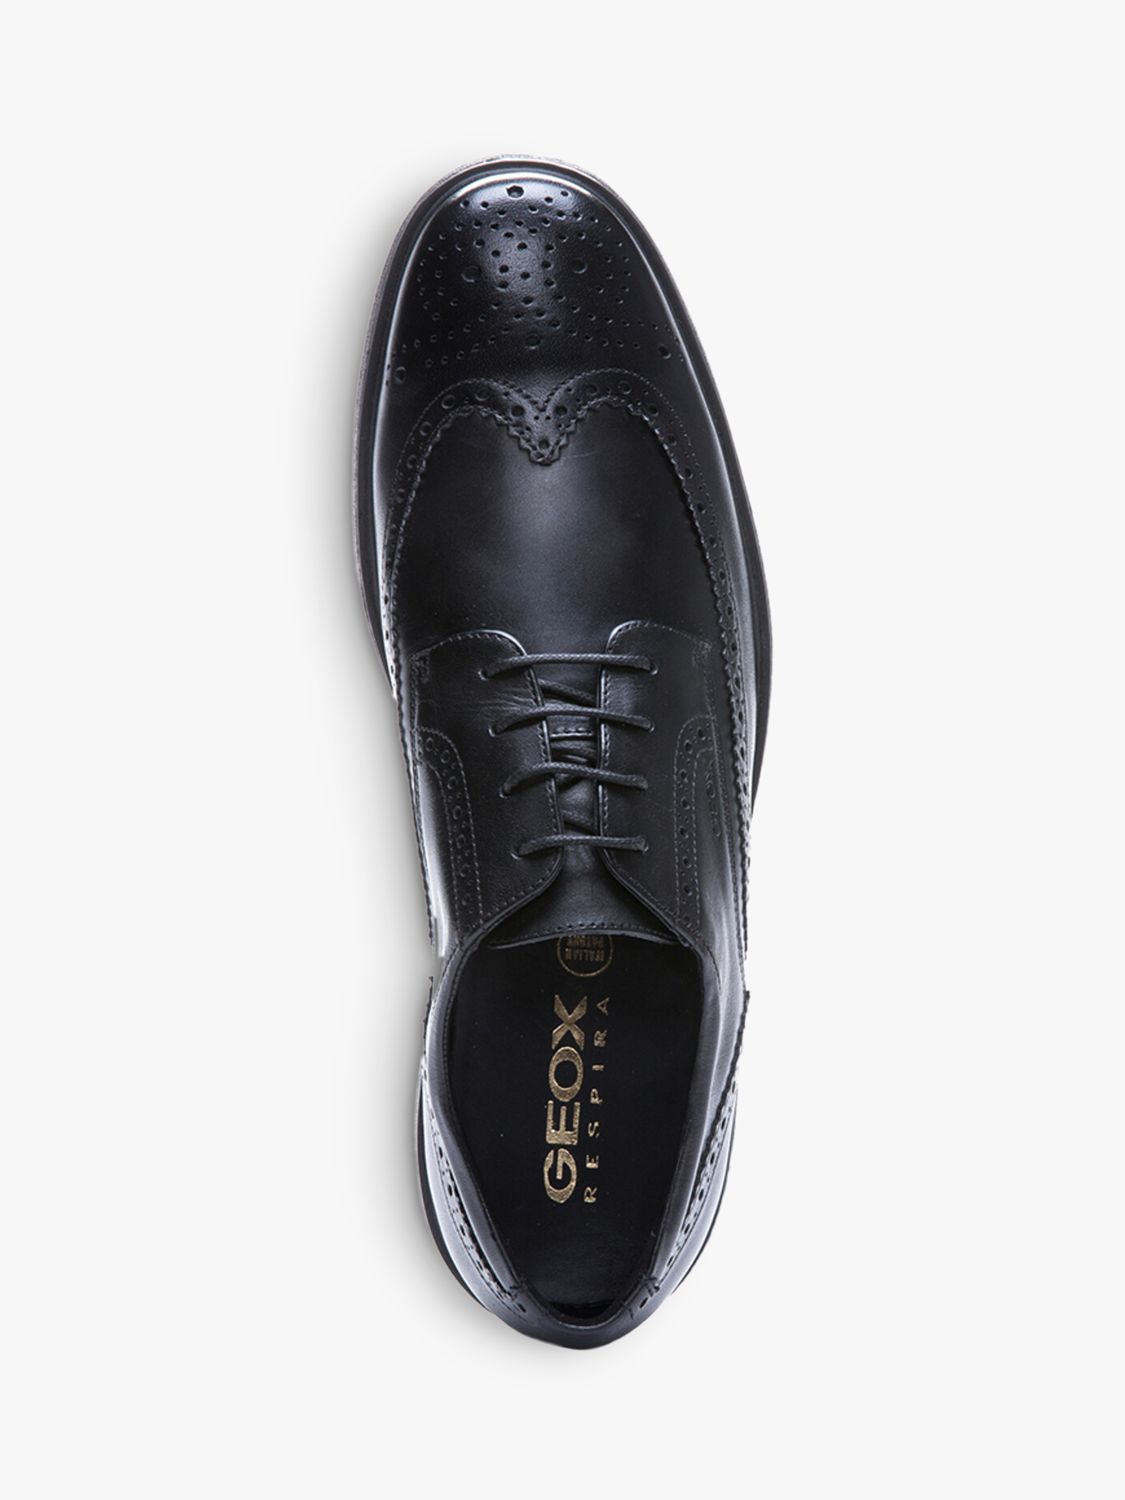 Por Acusador habla Geox Dublin Derby Shoes, Black, Black at John Lewis & Partners